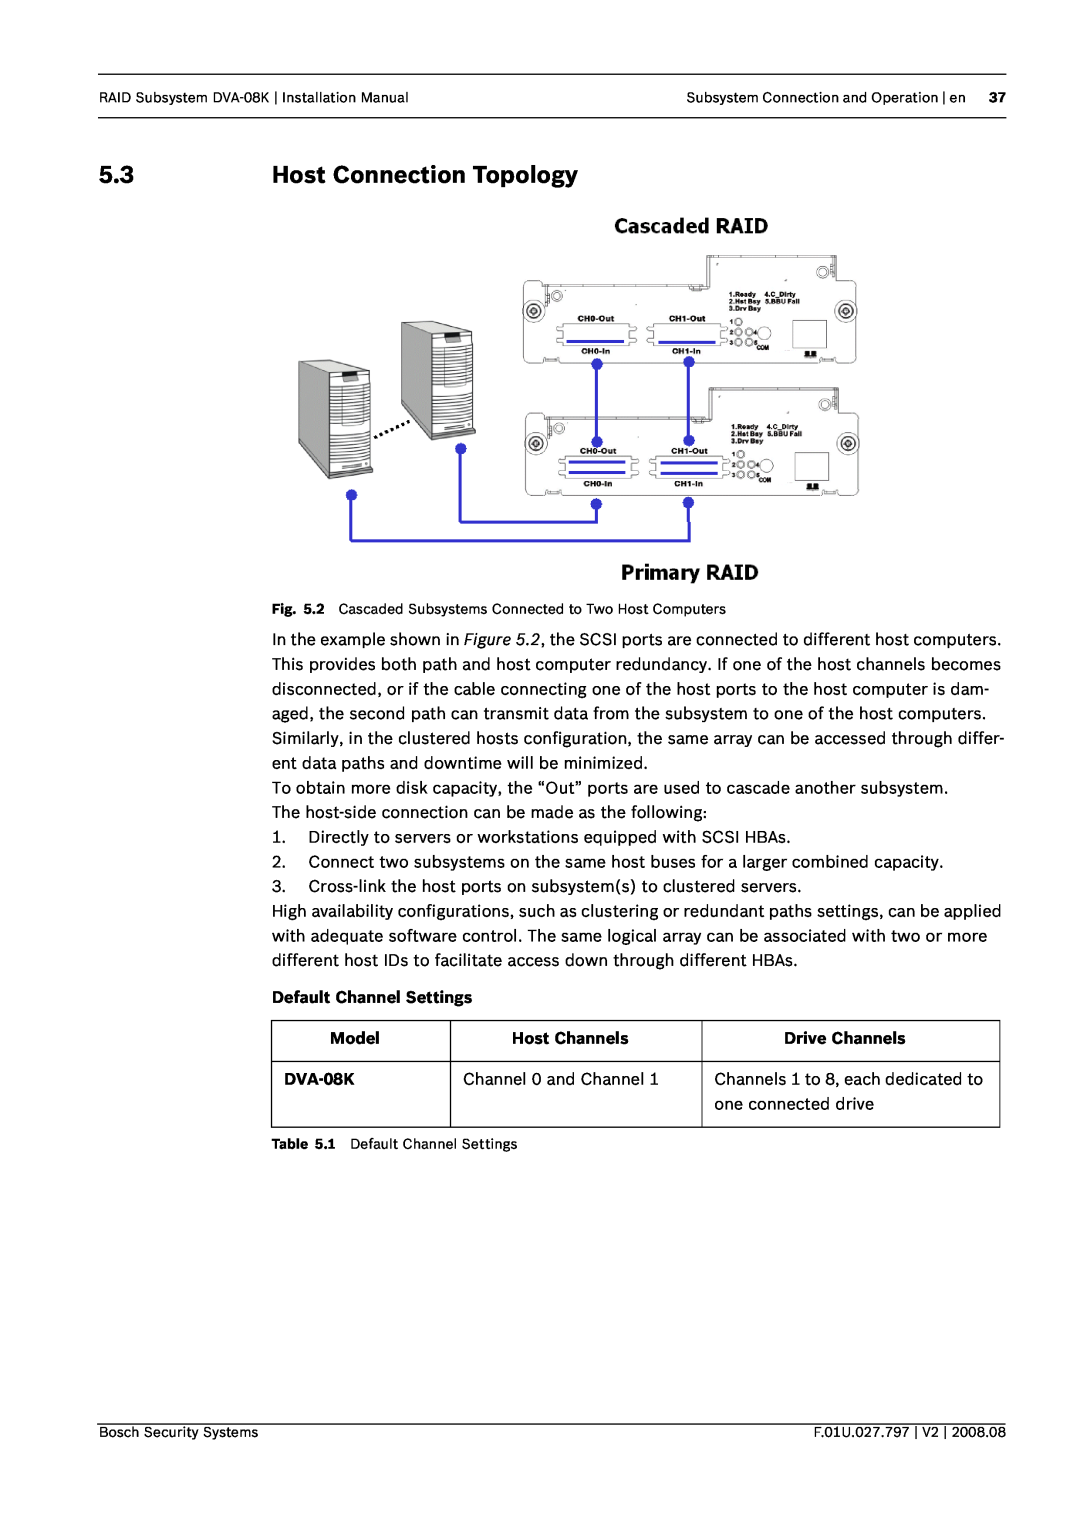 Bosch Appliances DVA-08K manual Host Connection Topology, Default Channel Settings, Model, Host Channels, Drive Channels 